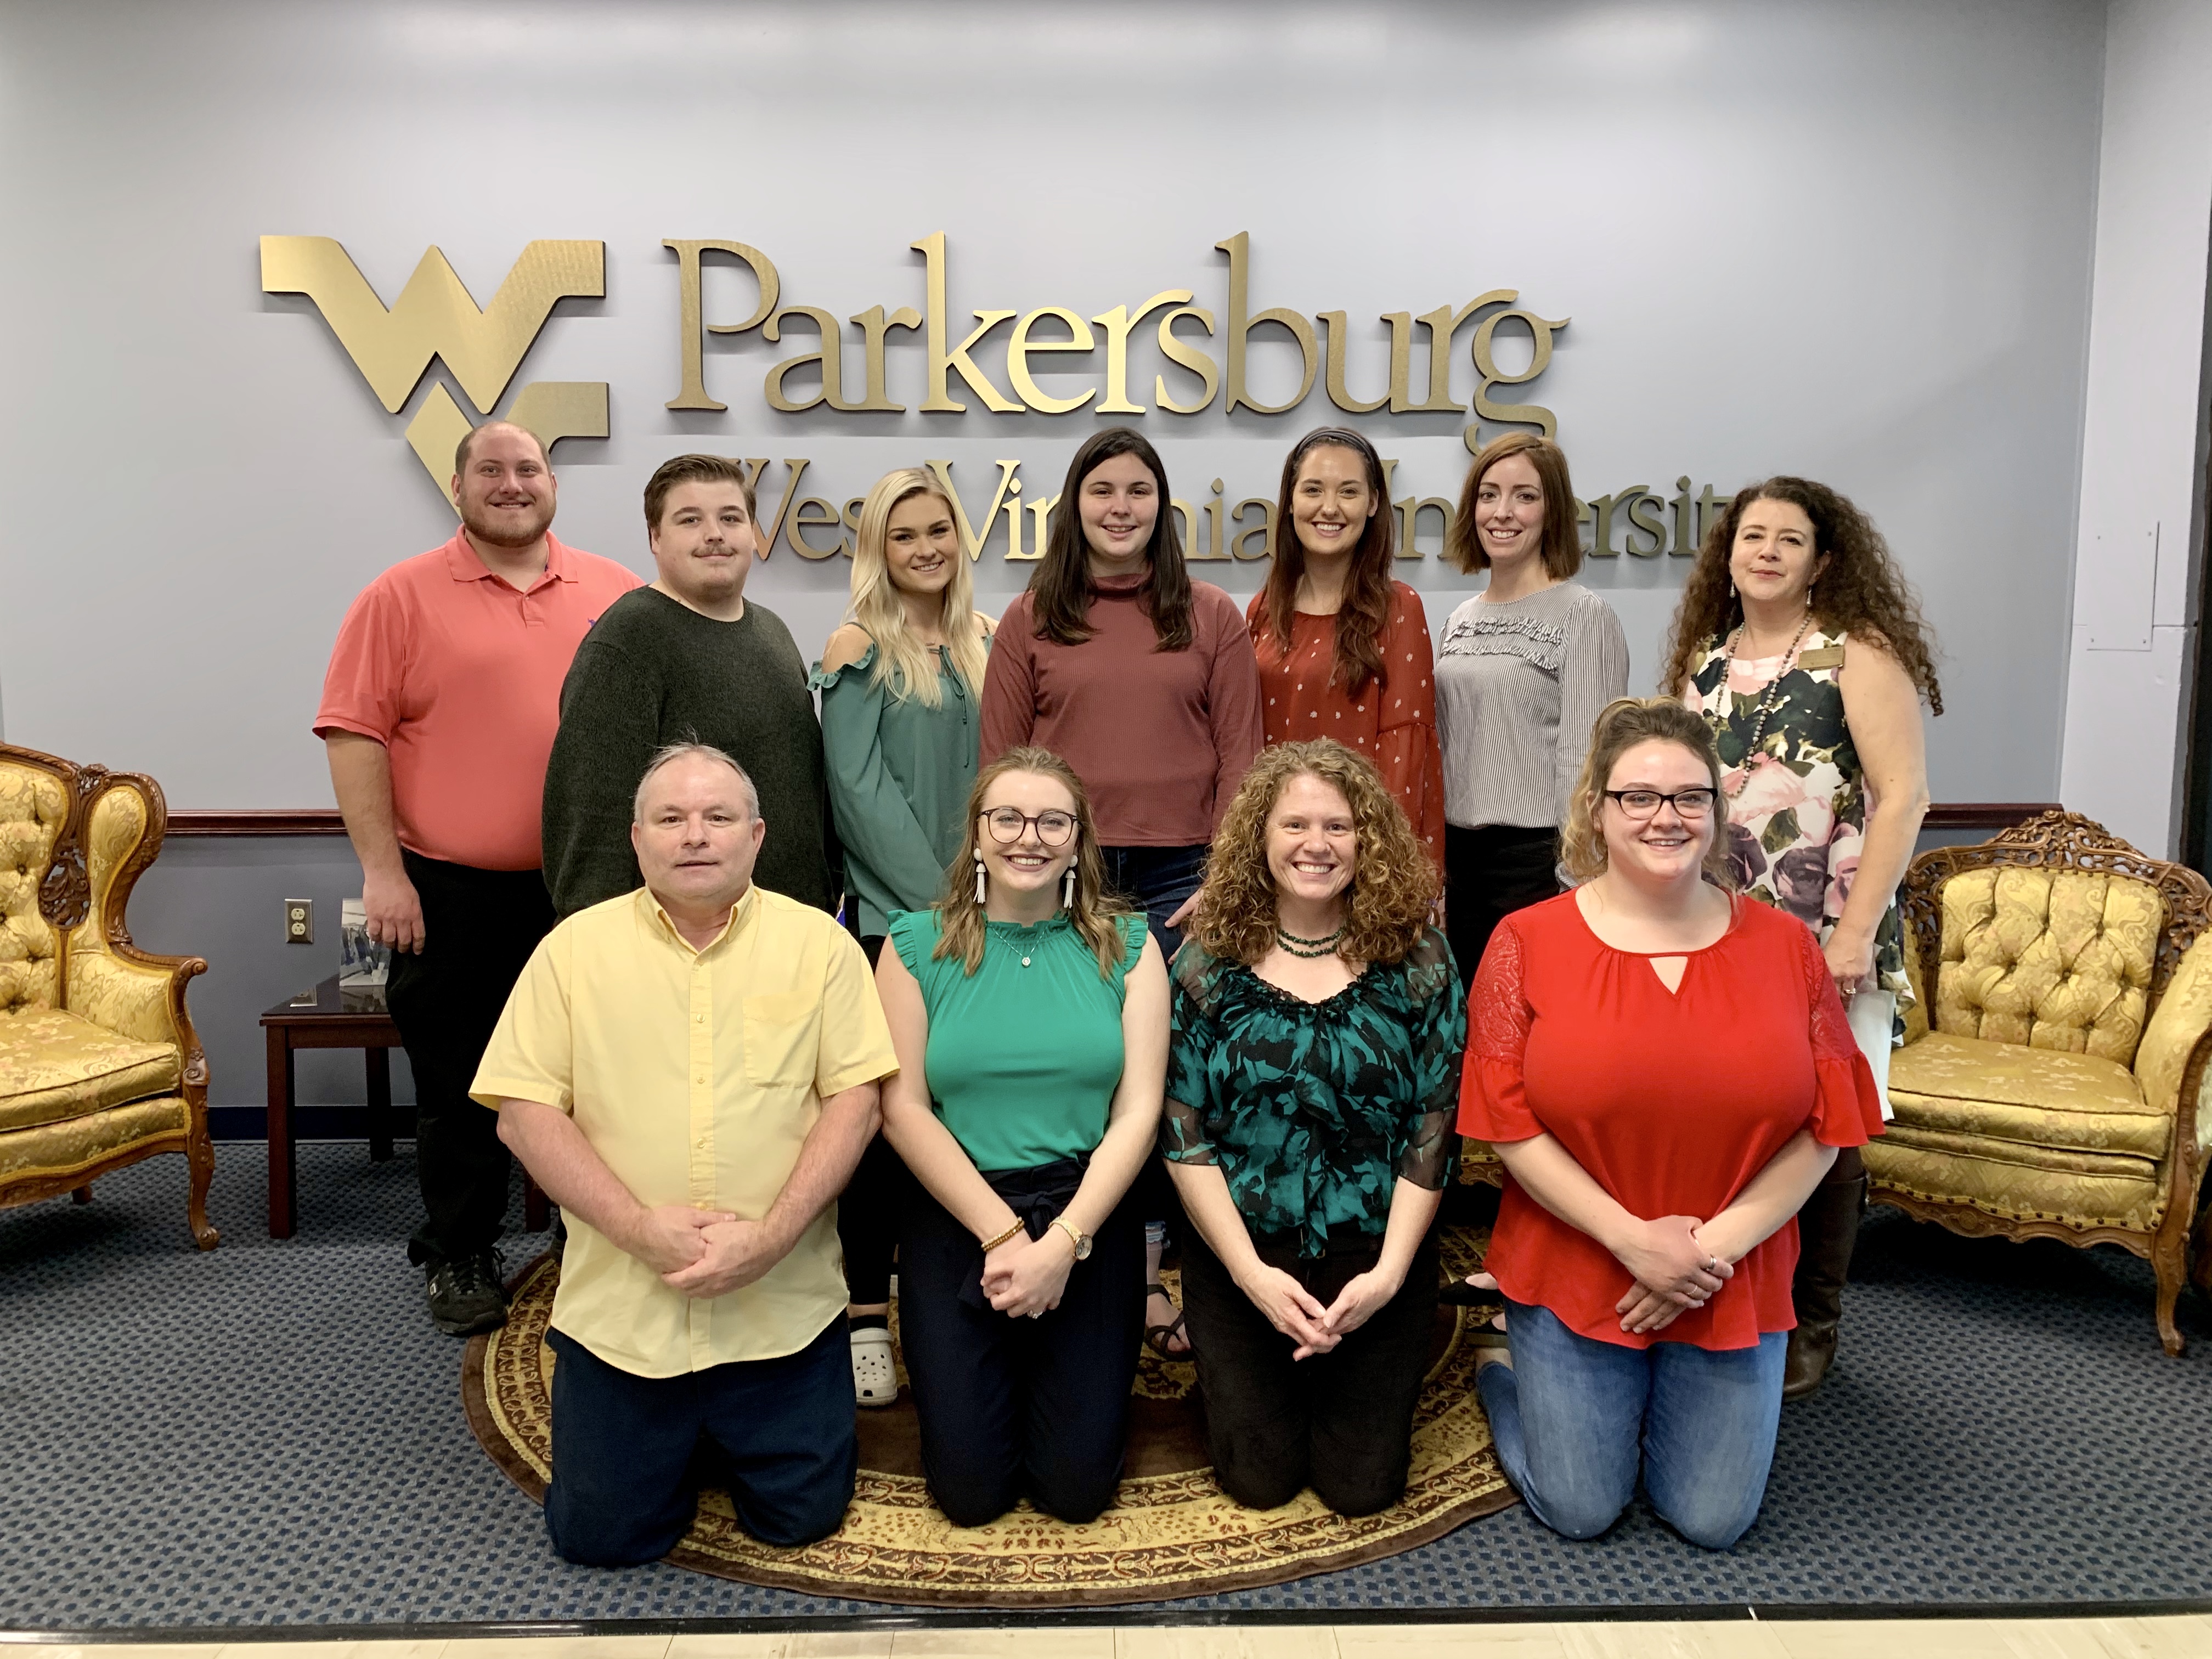 WVU Parkersburg Marketing & Communications team earns five educational advertising awards